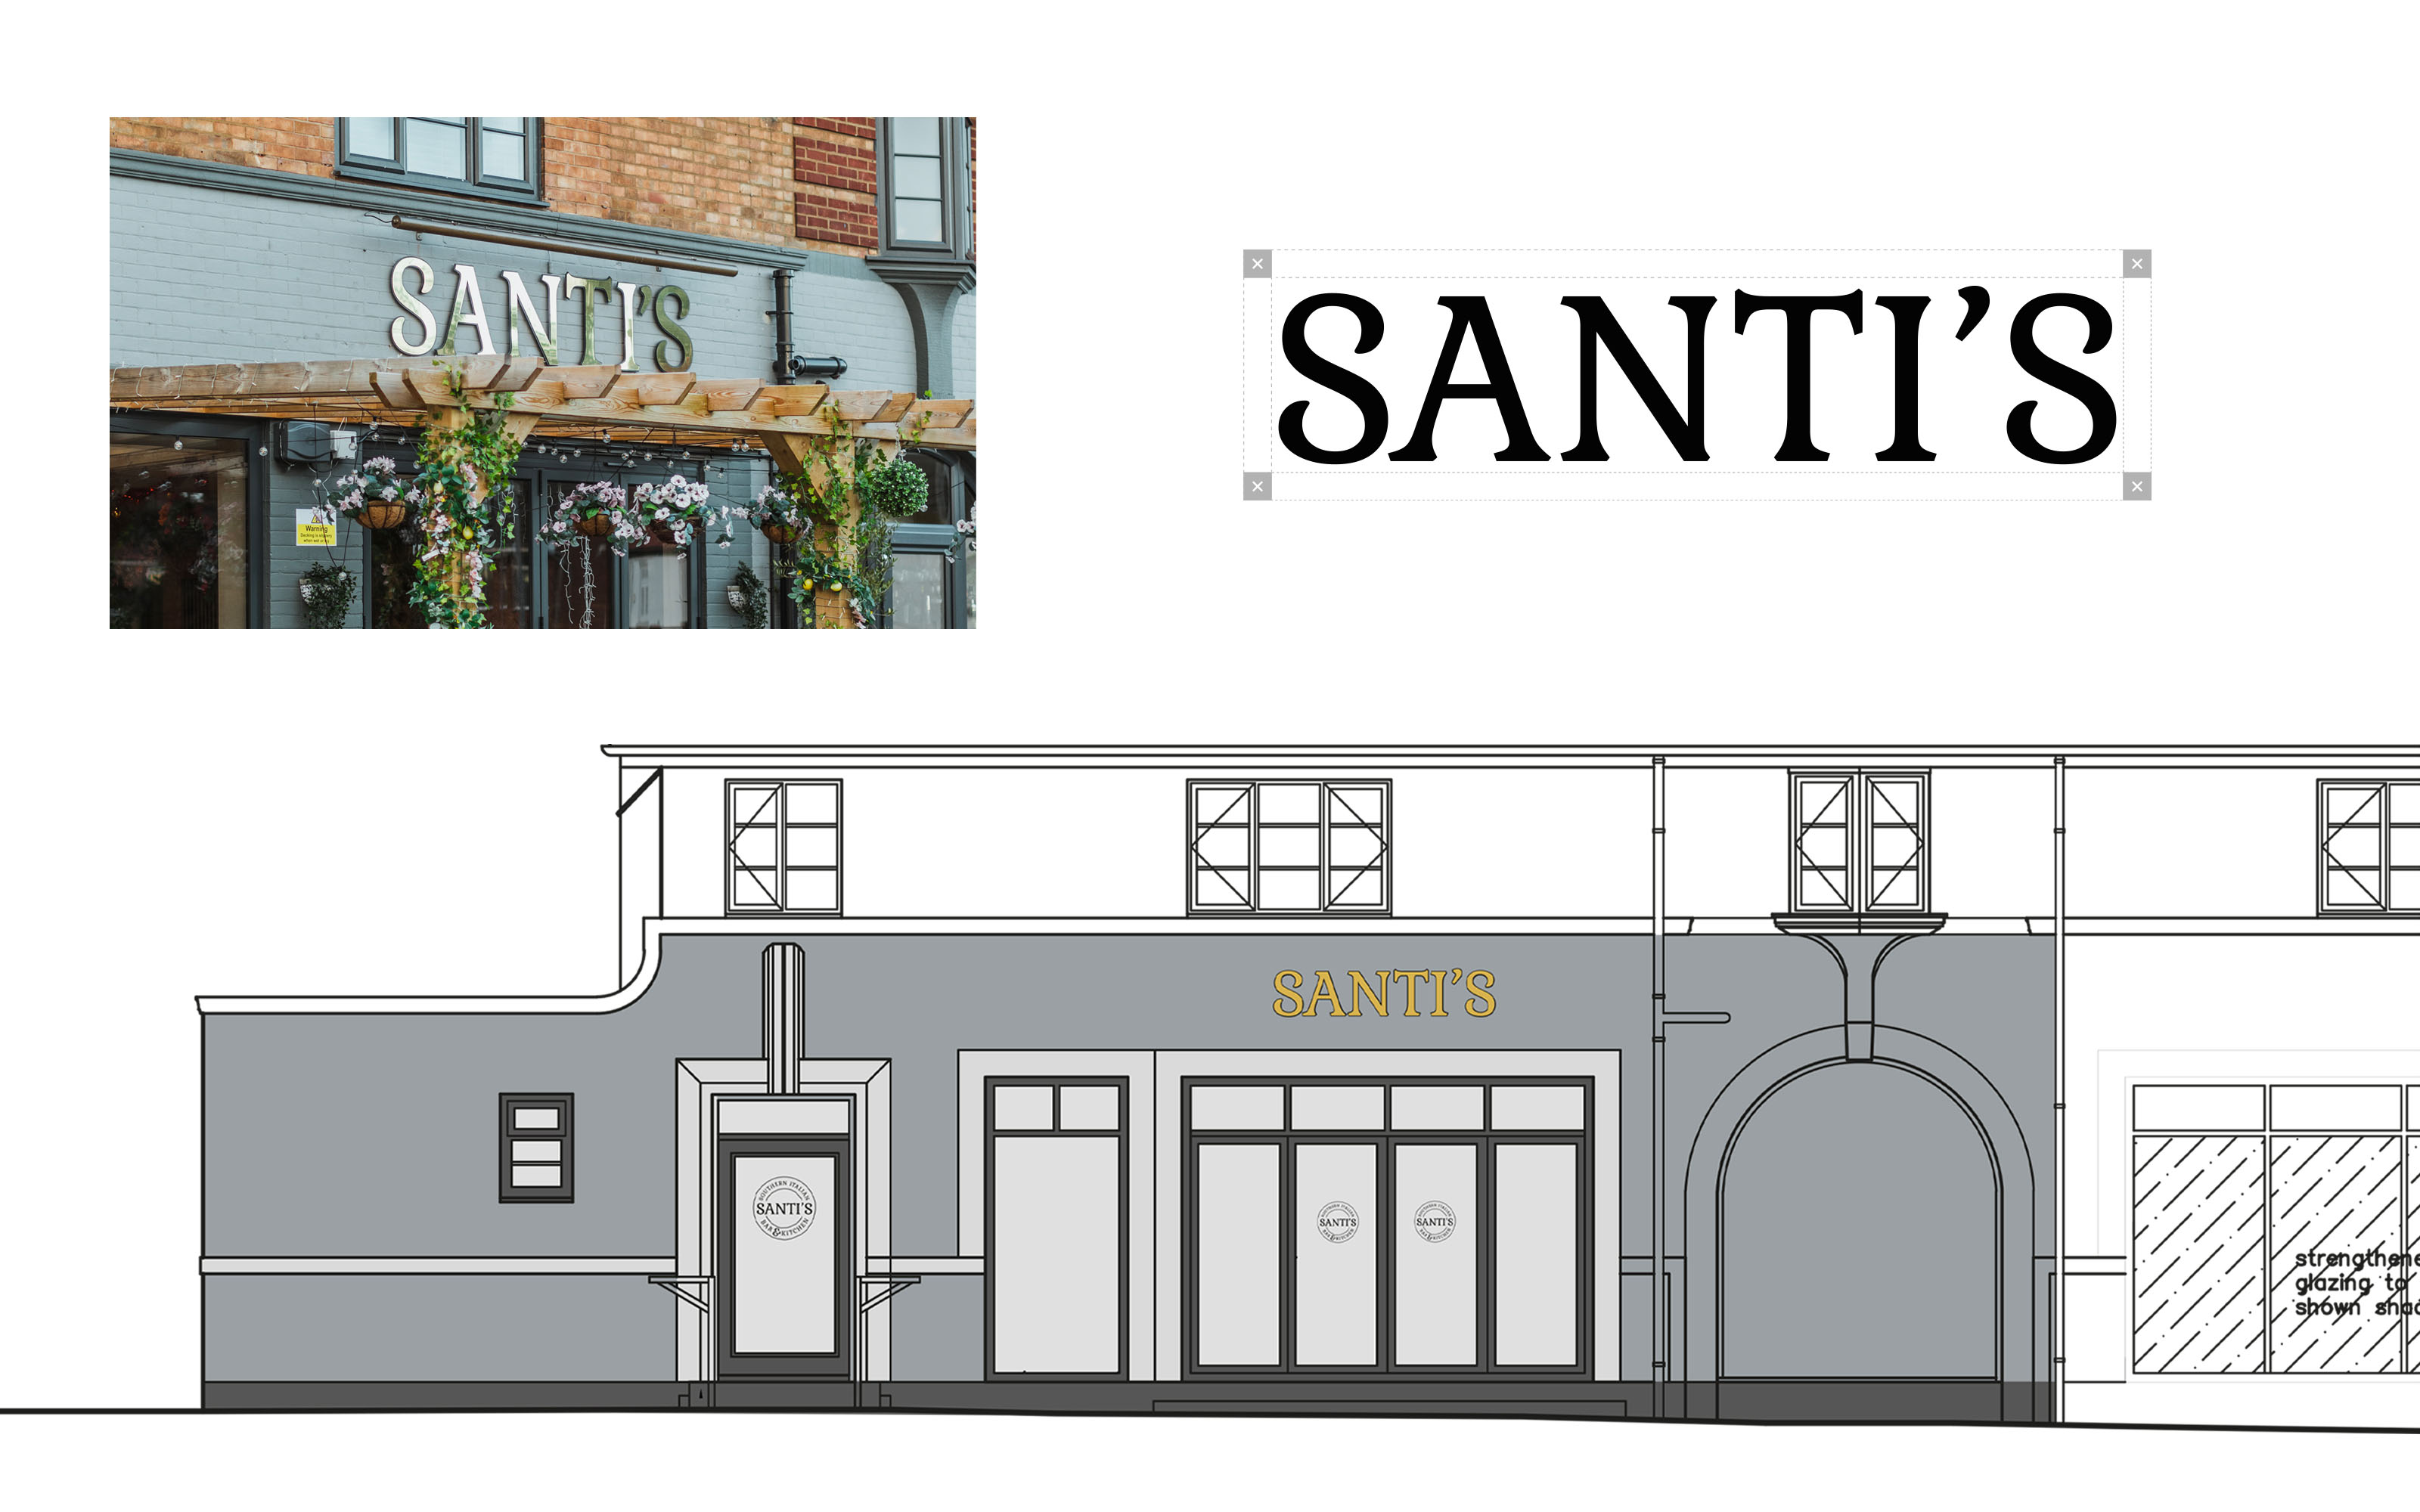 Santi's Souther Italian Bar & Kitchen restaurant signage